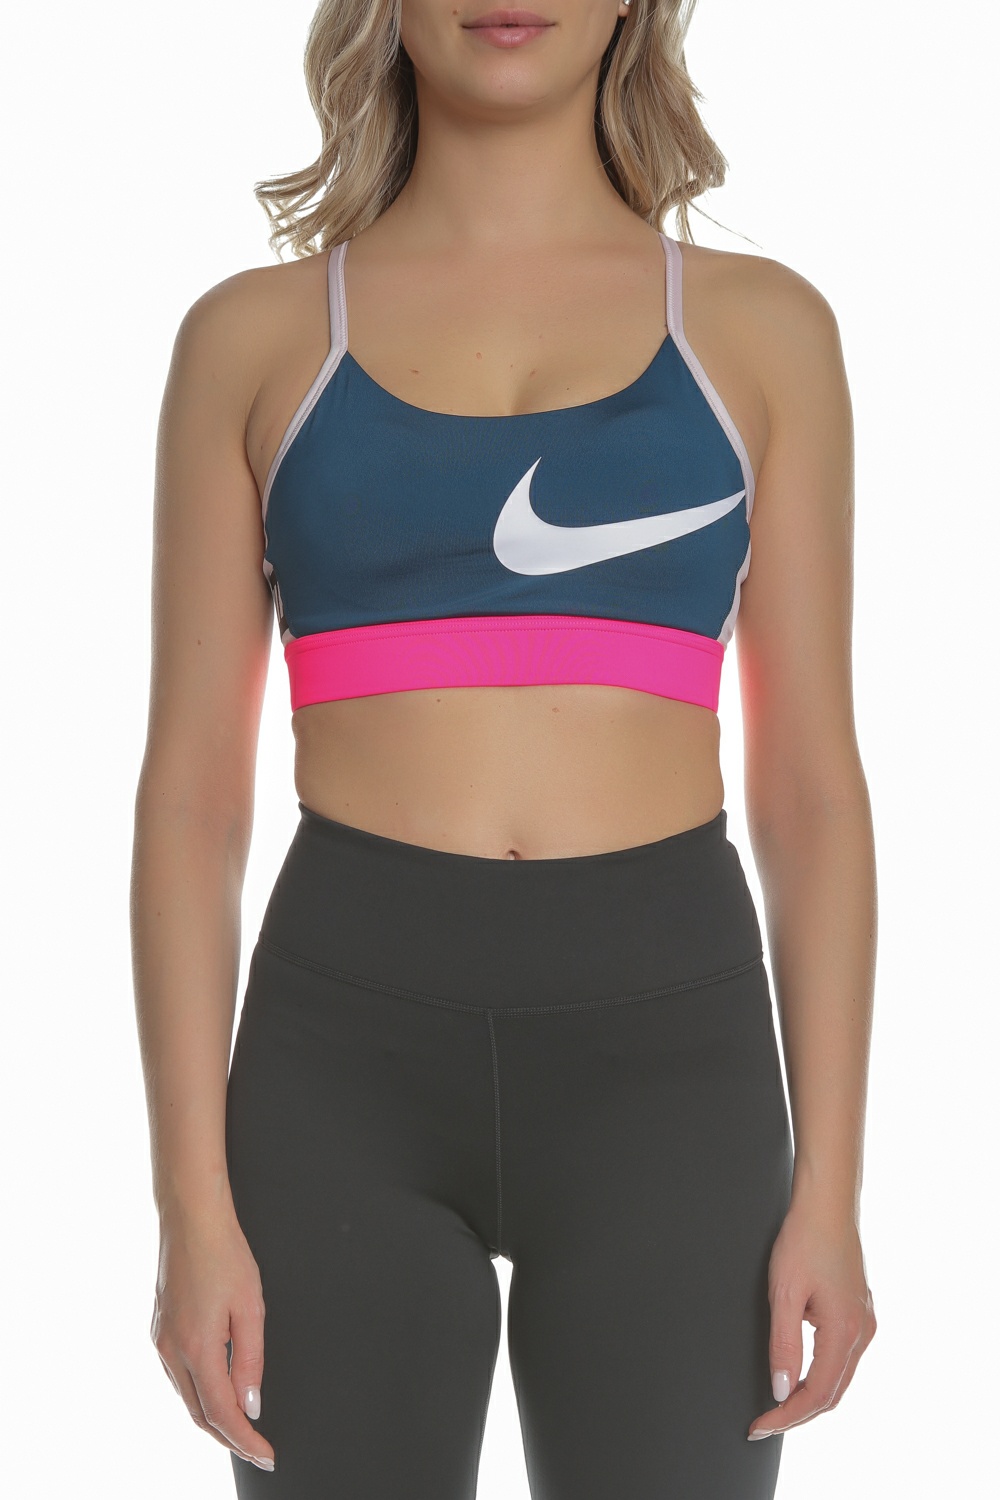 NIKE - Γυναικείο αθλητικό μπουστάκι NIKE ICNCLSH BRA LIGHT μπλε ροζ Γυναικεία/Ρούχα/Αθλητικά/Μπουστάκια